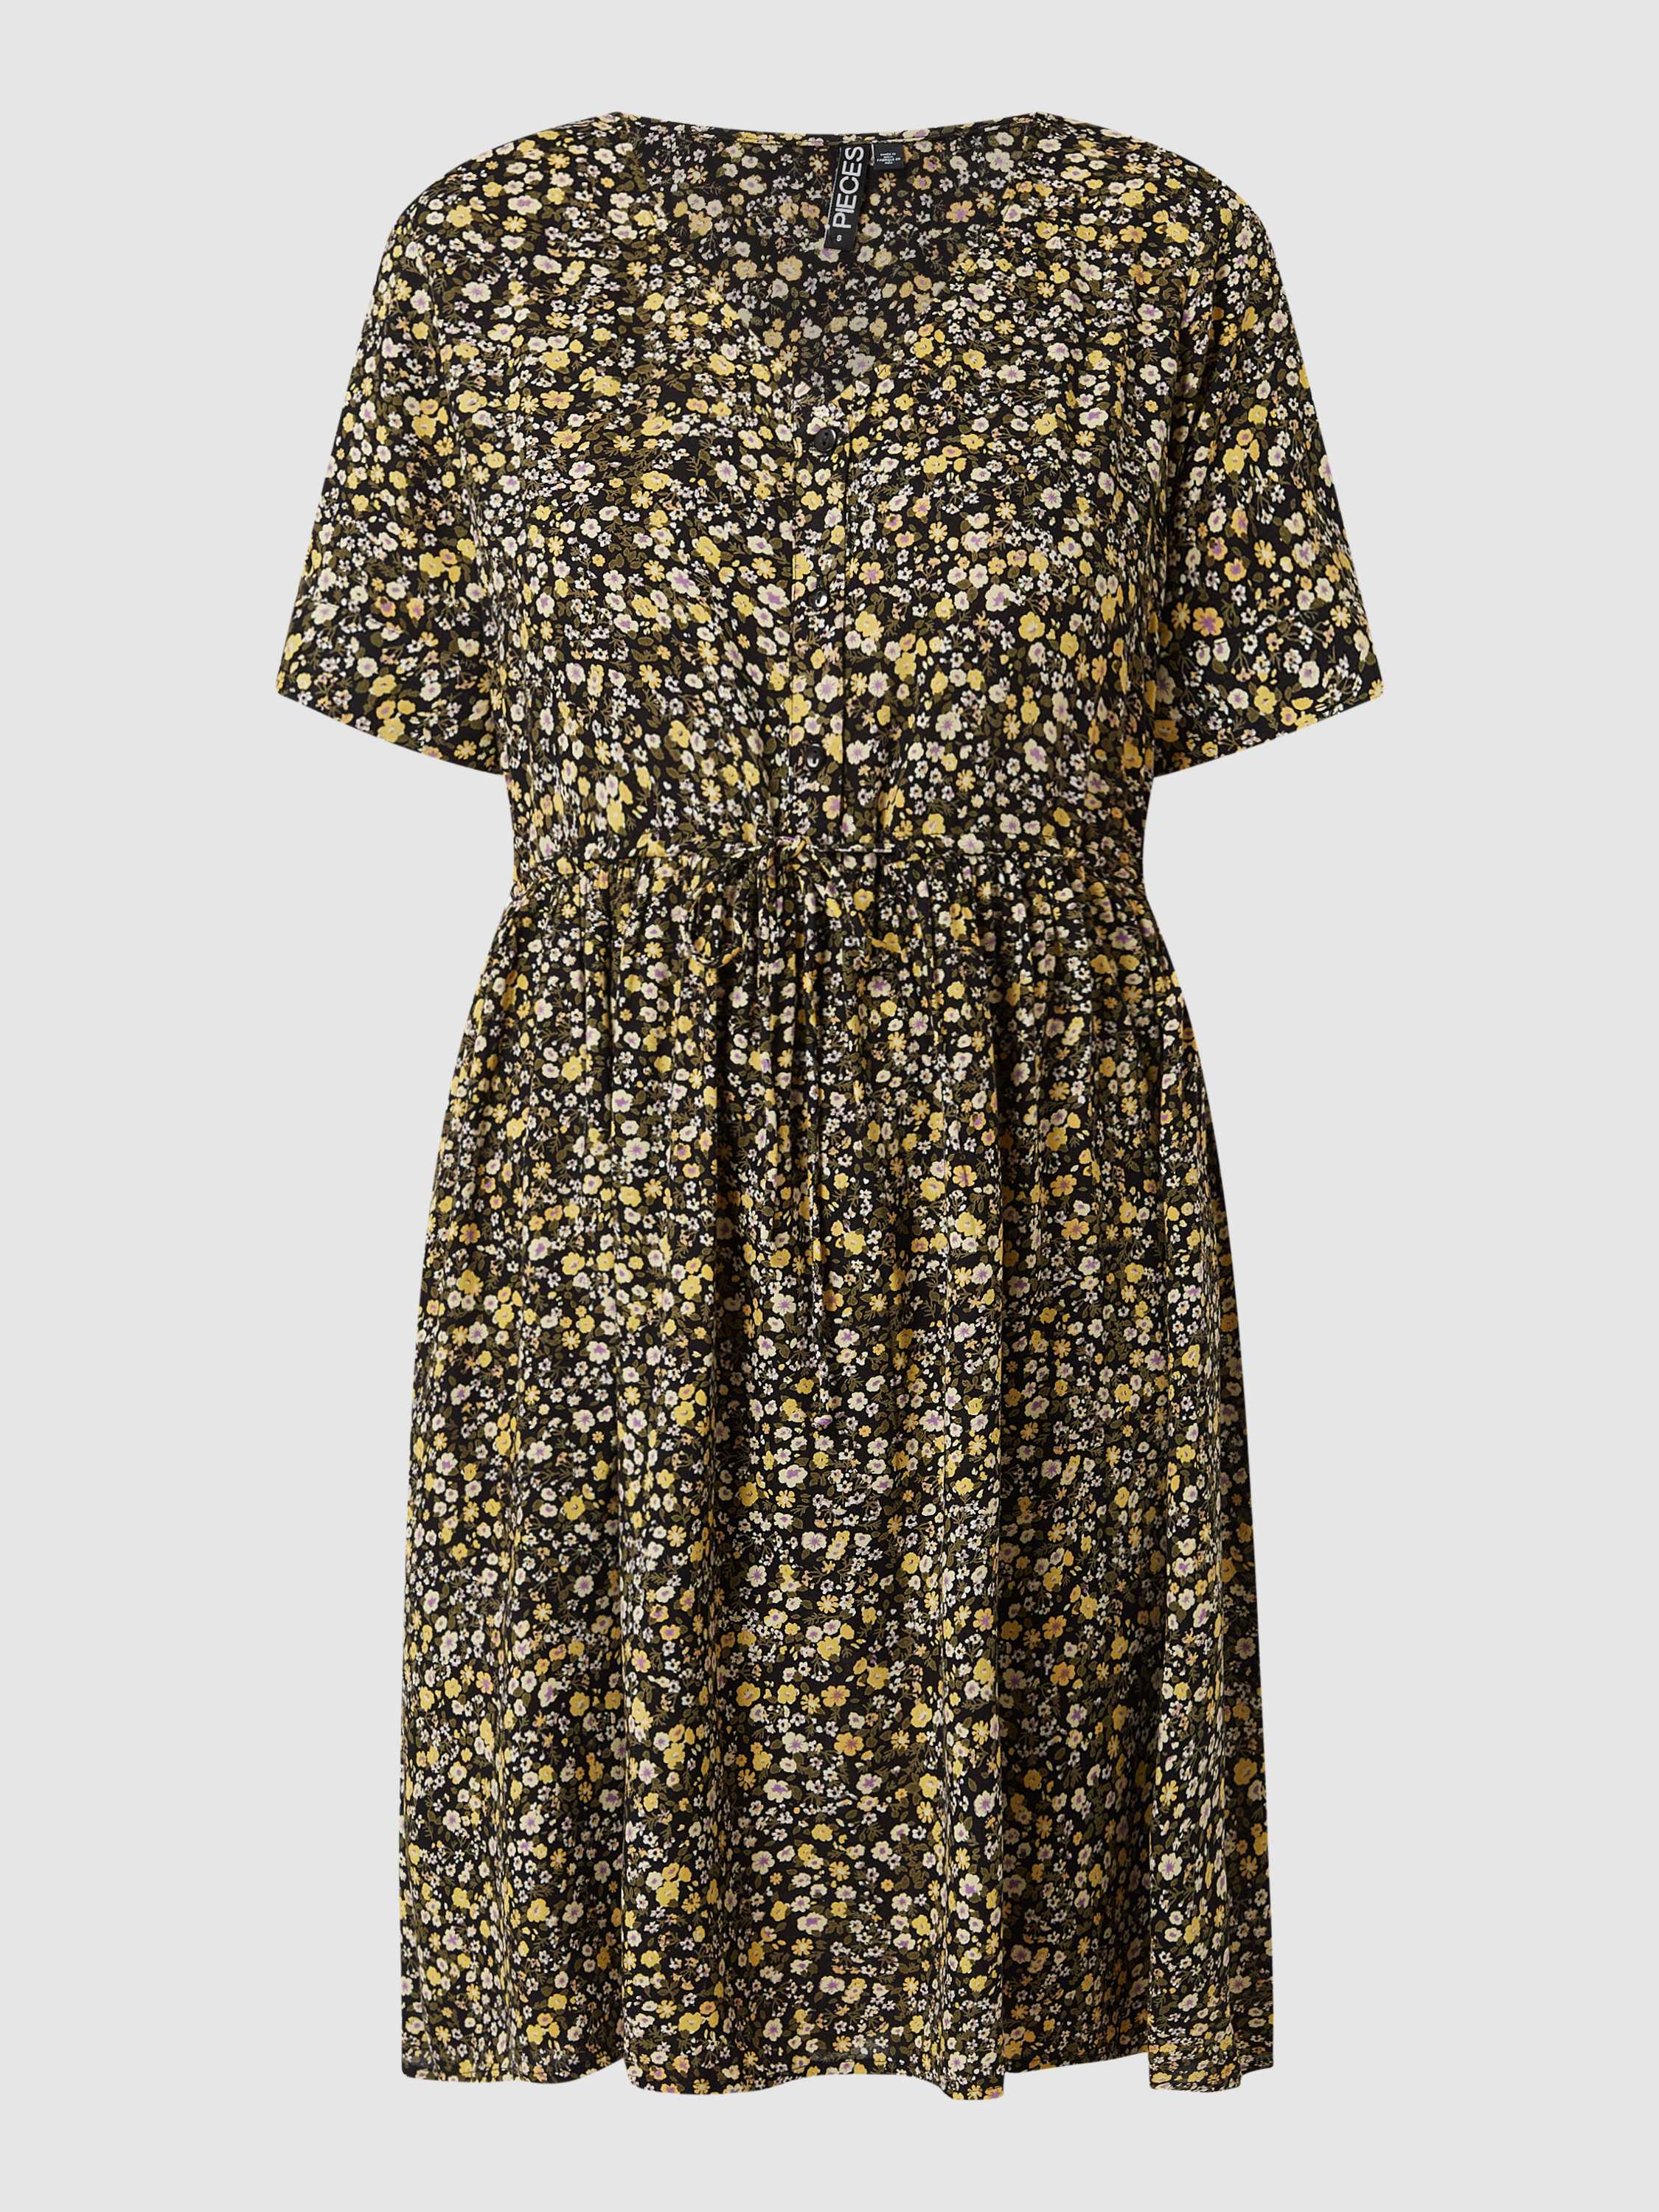 Kleid mit Allover-Muster Modell 'Nya', Peek & Cloppenburg